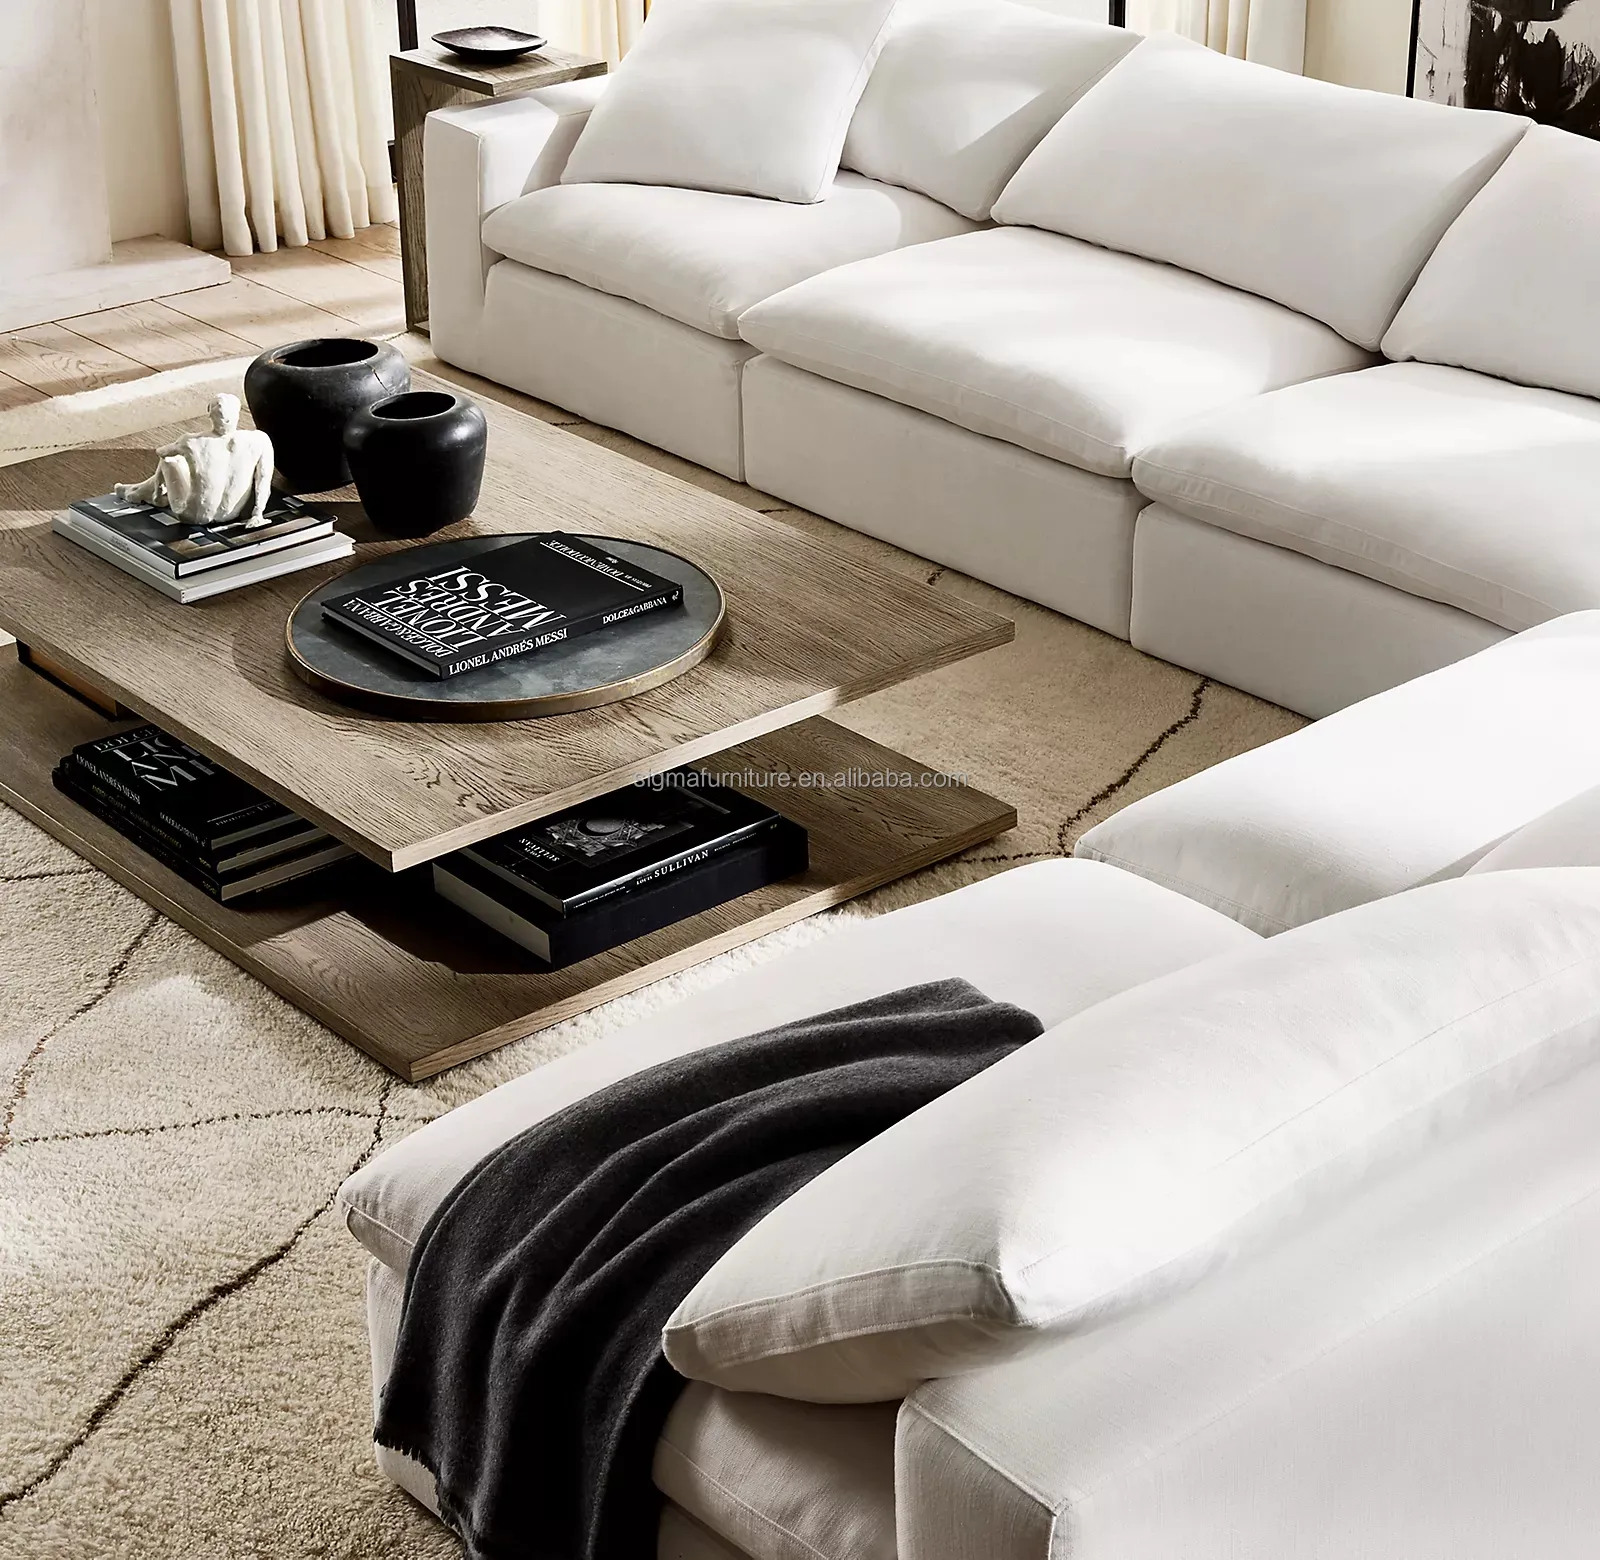 Hot design Nordic style sofa bed modern living room furniture cloud sofa set L shape sectional modular sofa